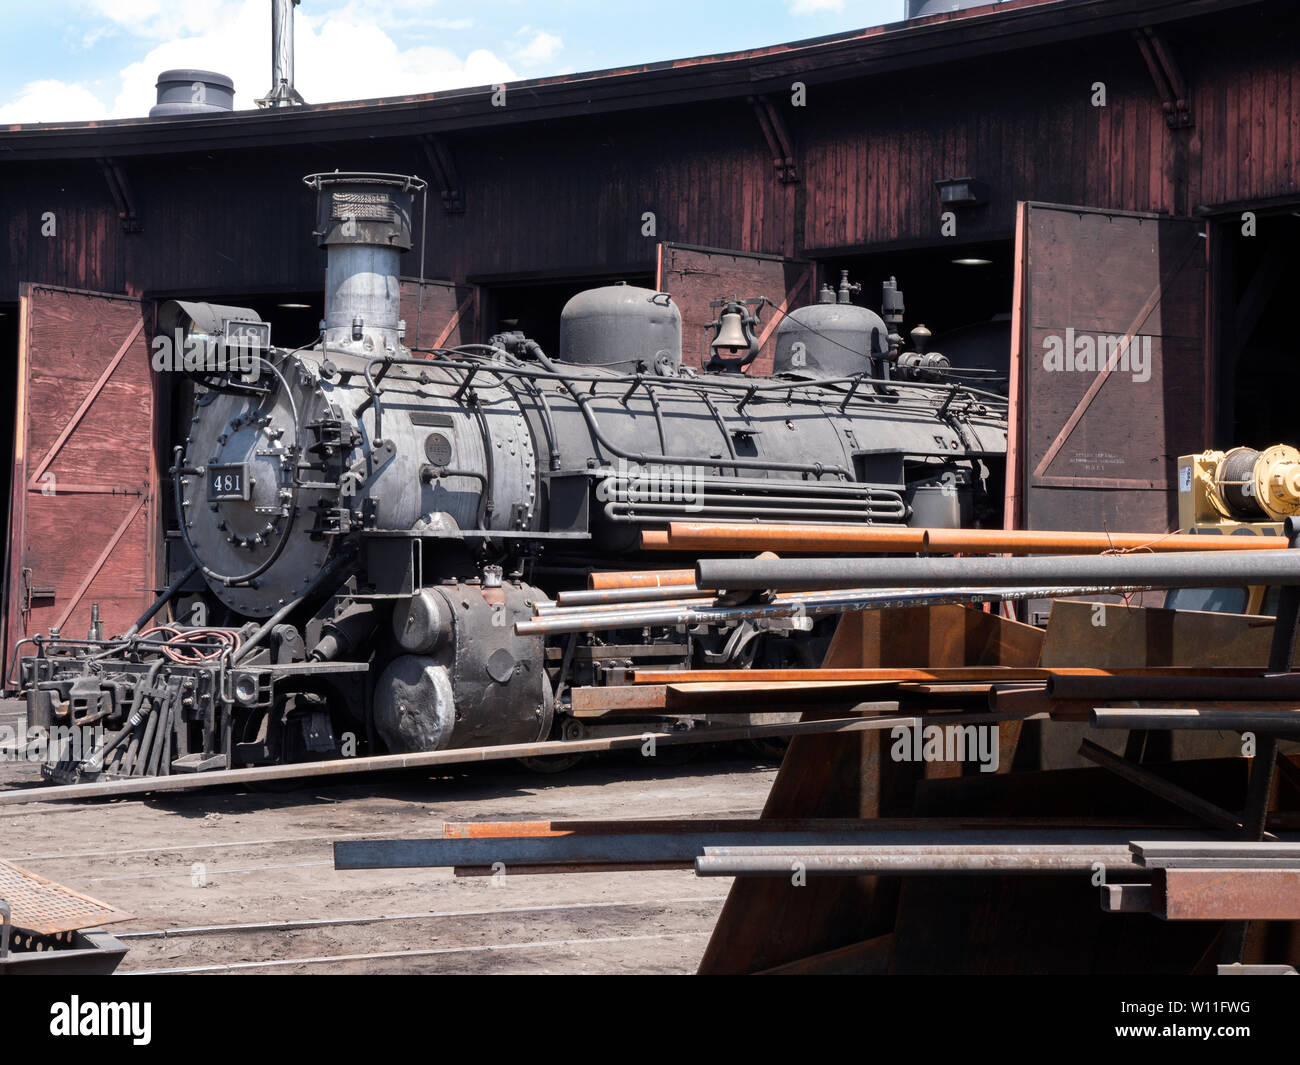 Steam Locomotive of the Durango & Silverton Railroad in Durango Depot Stock Photo